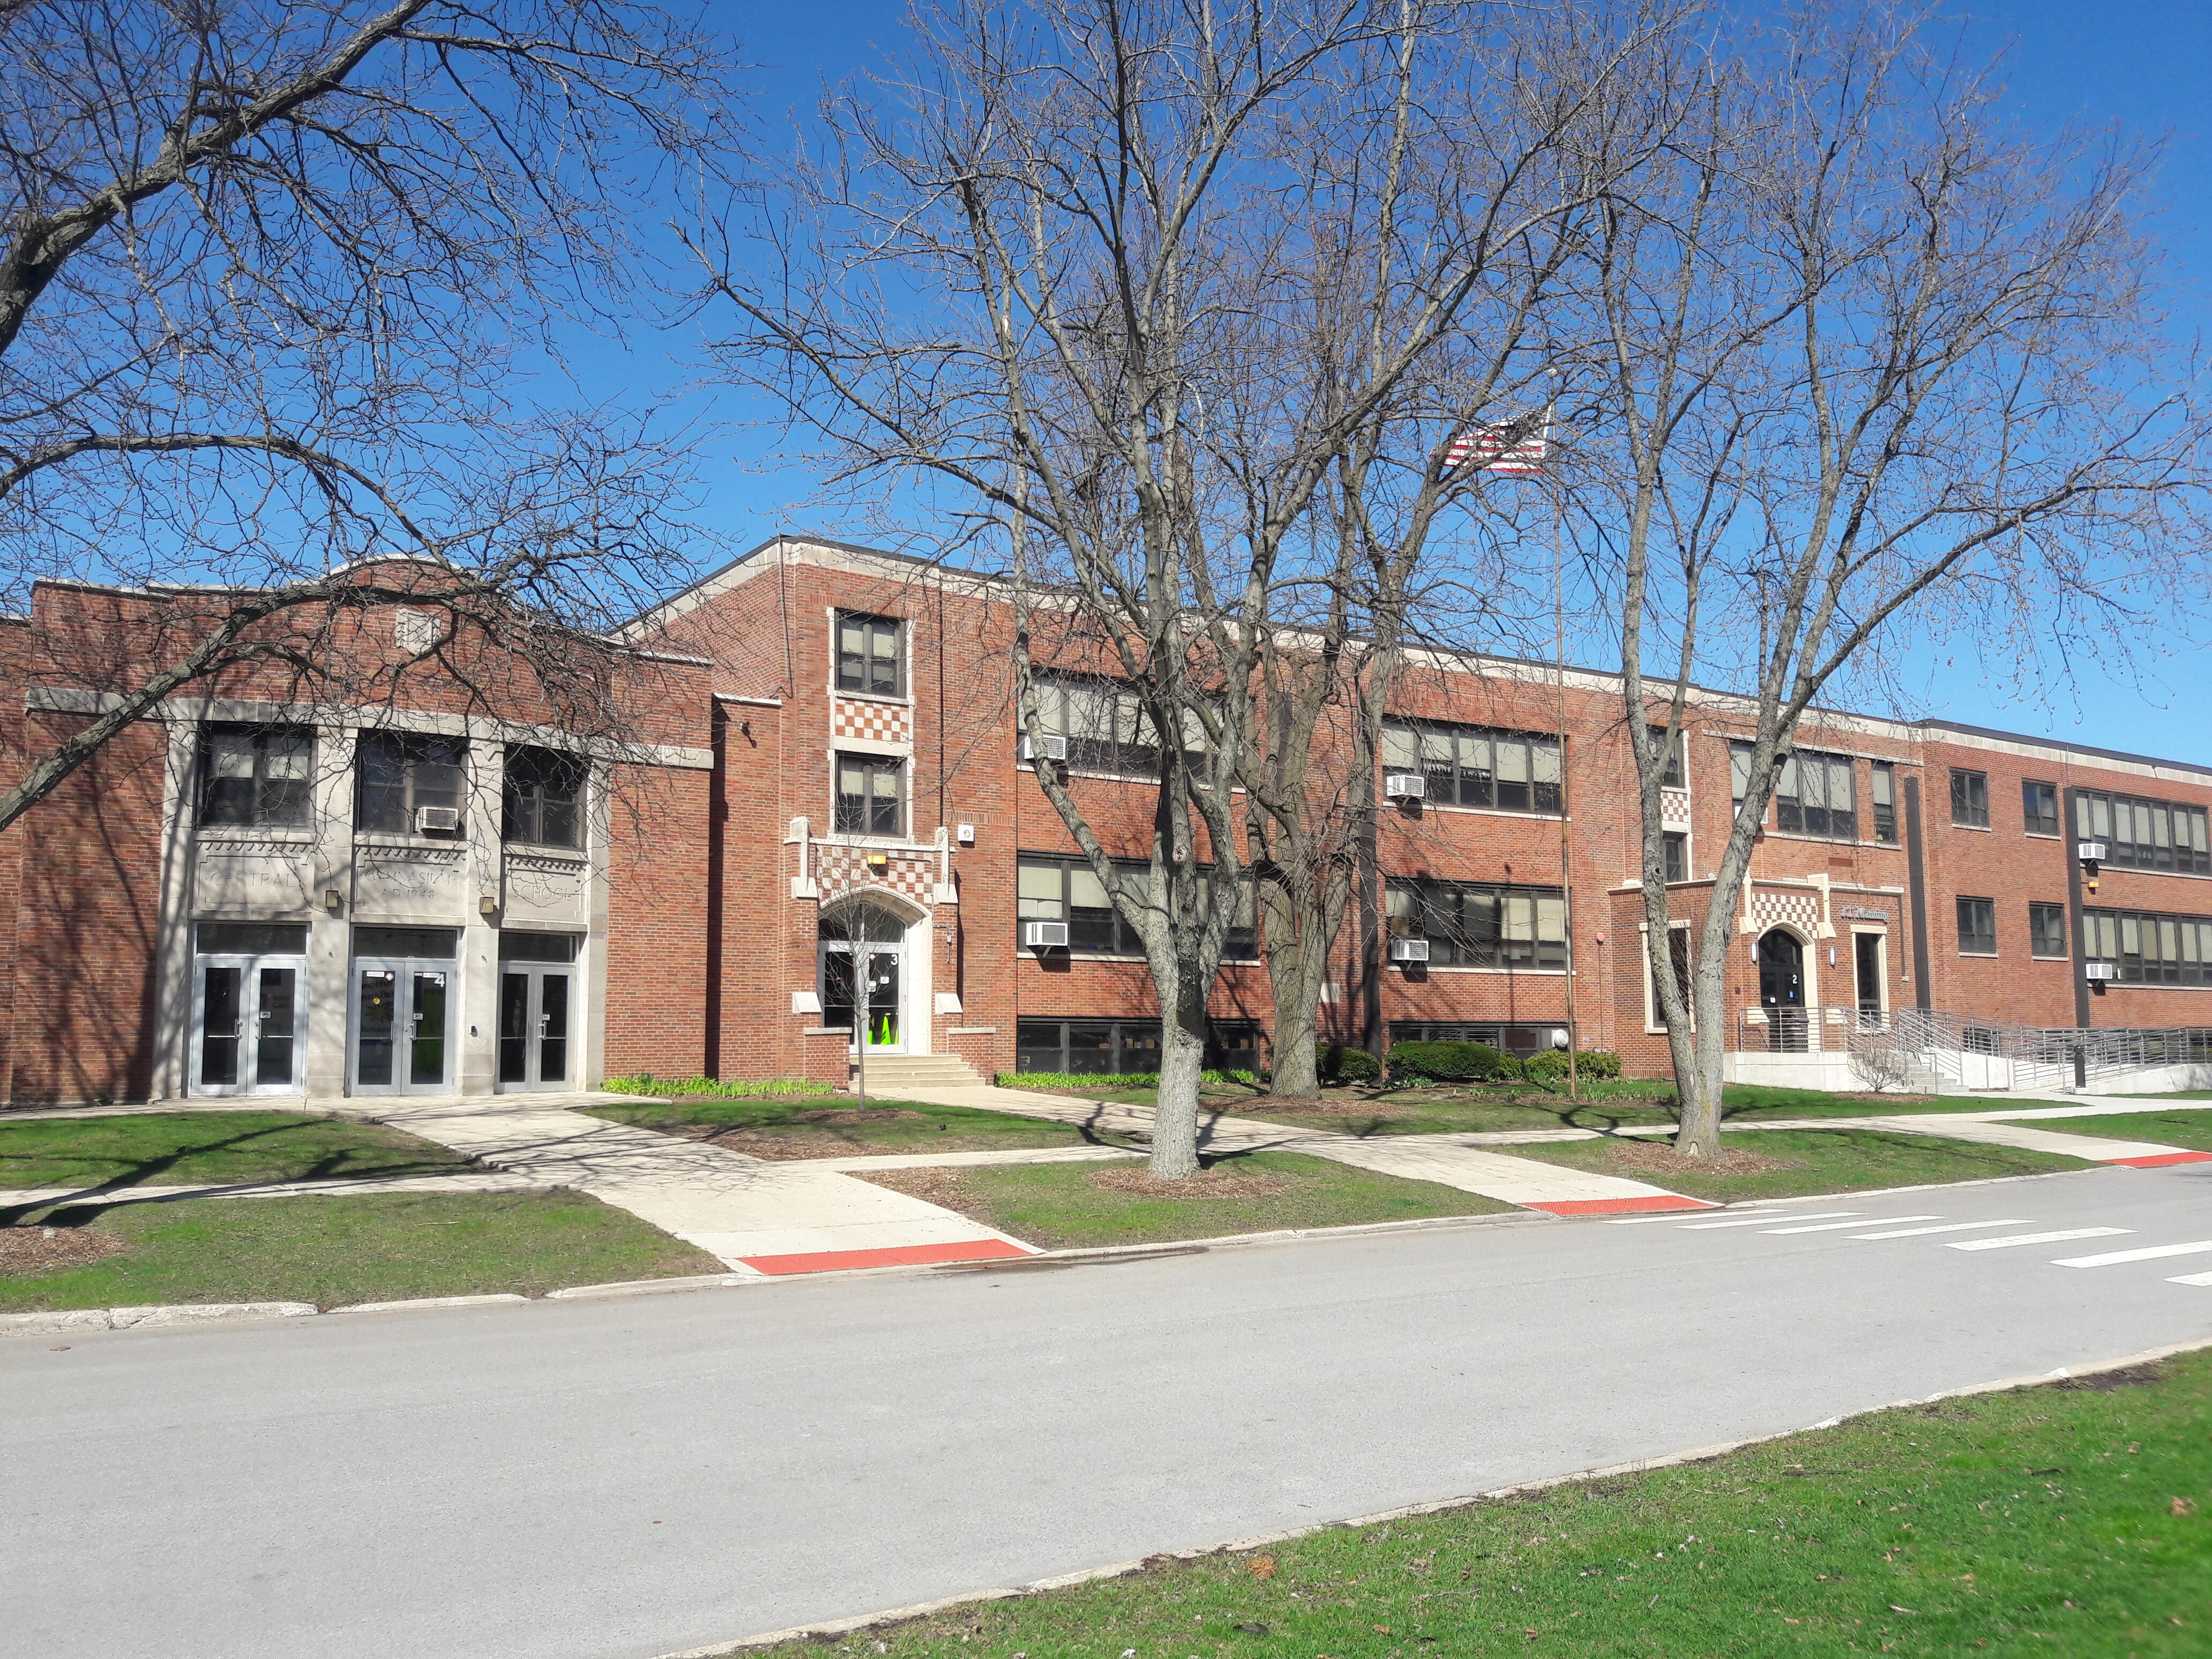 J.T. Manning Elementary. School building